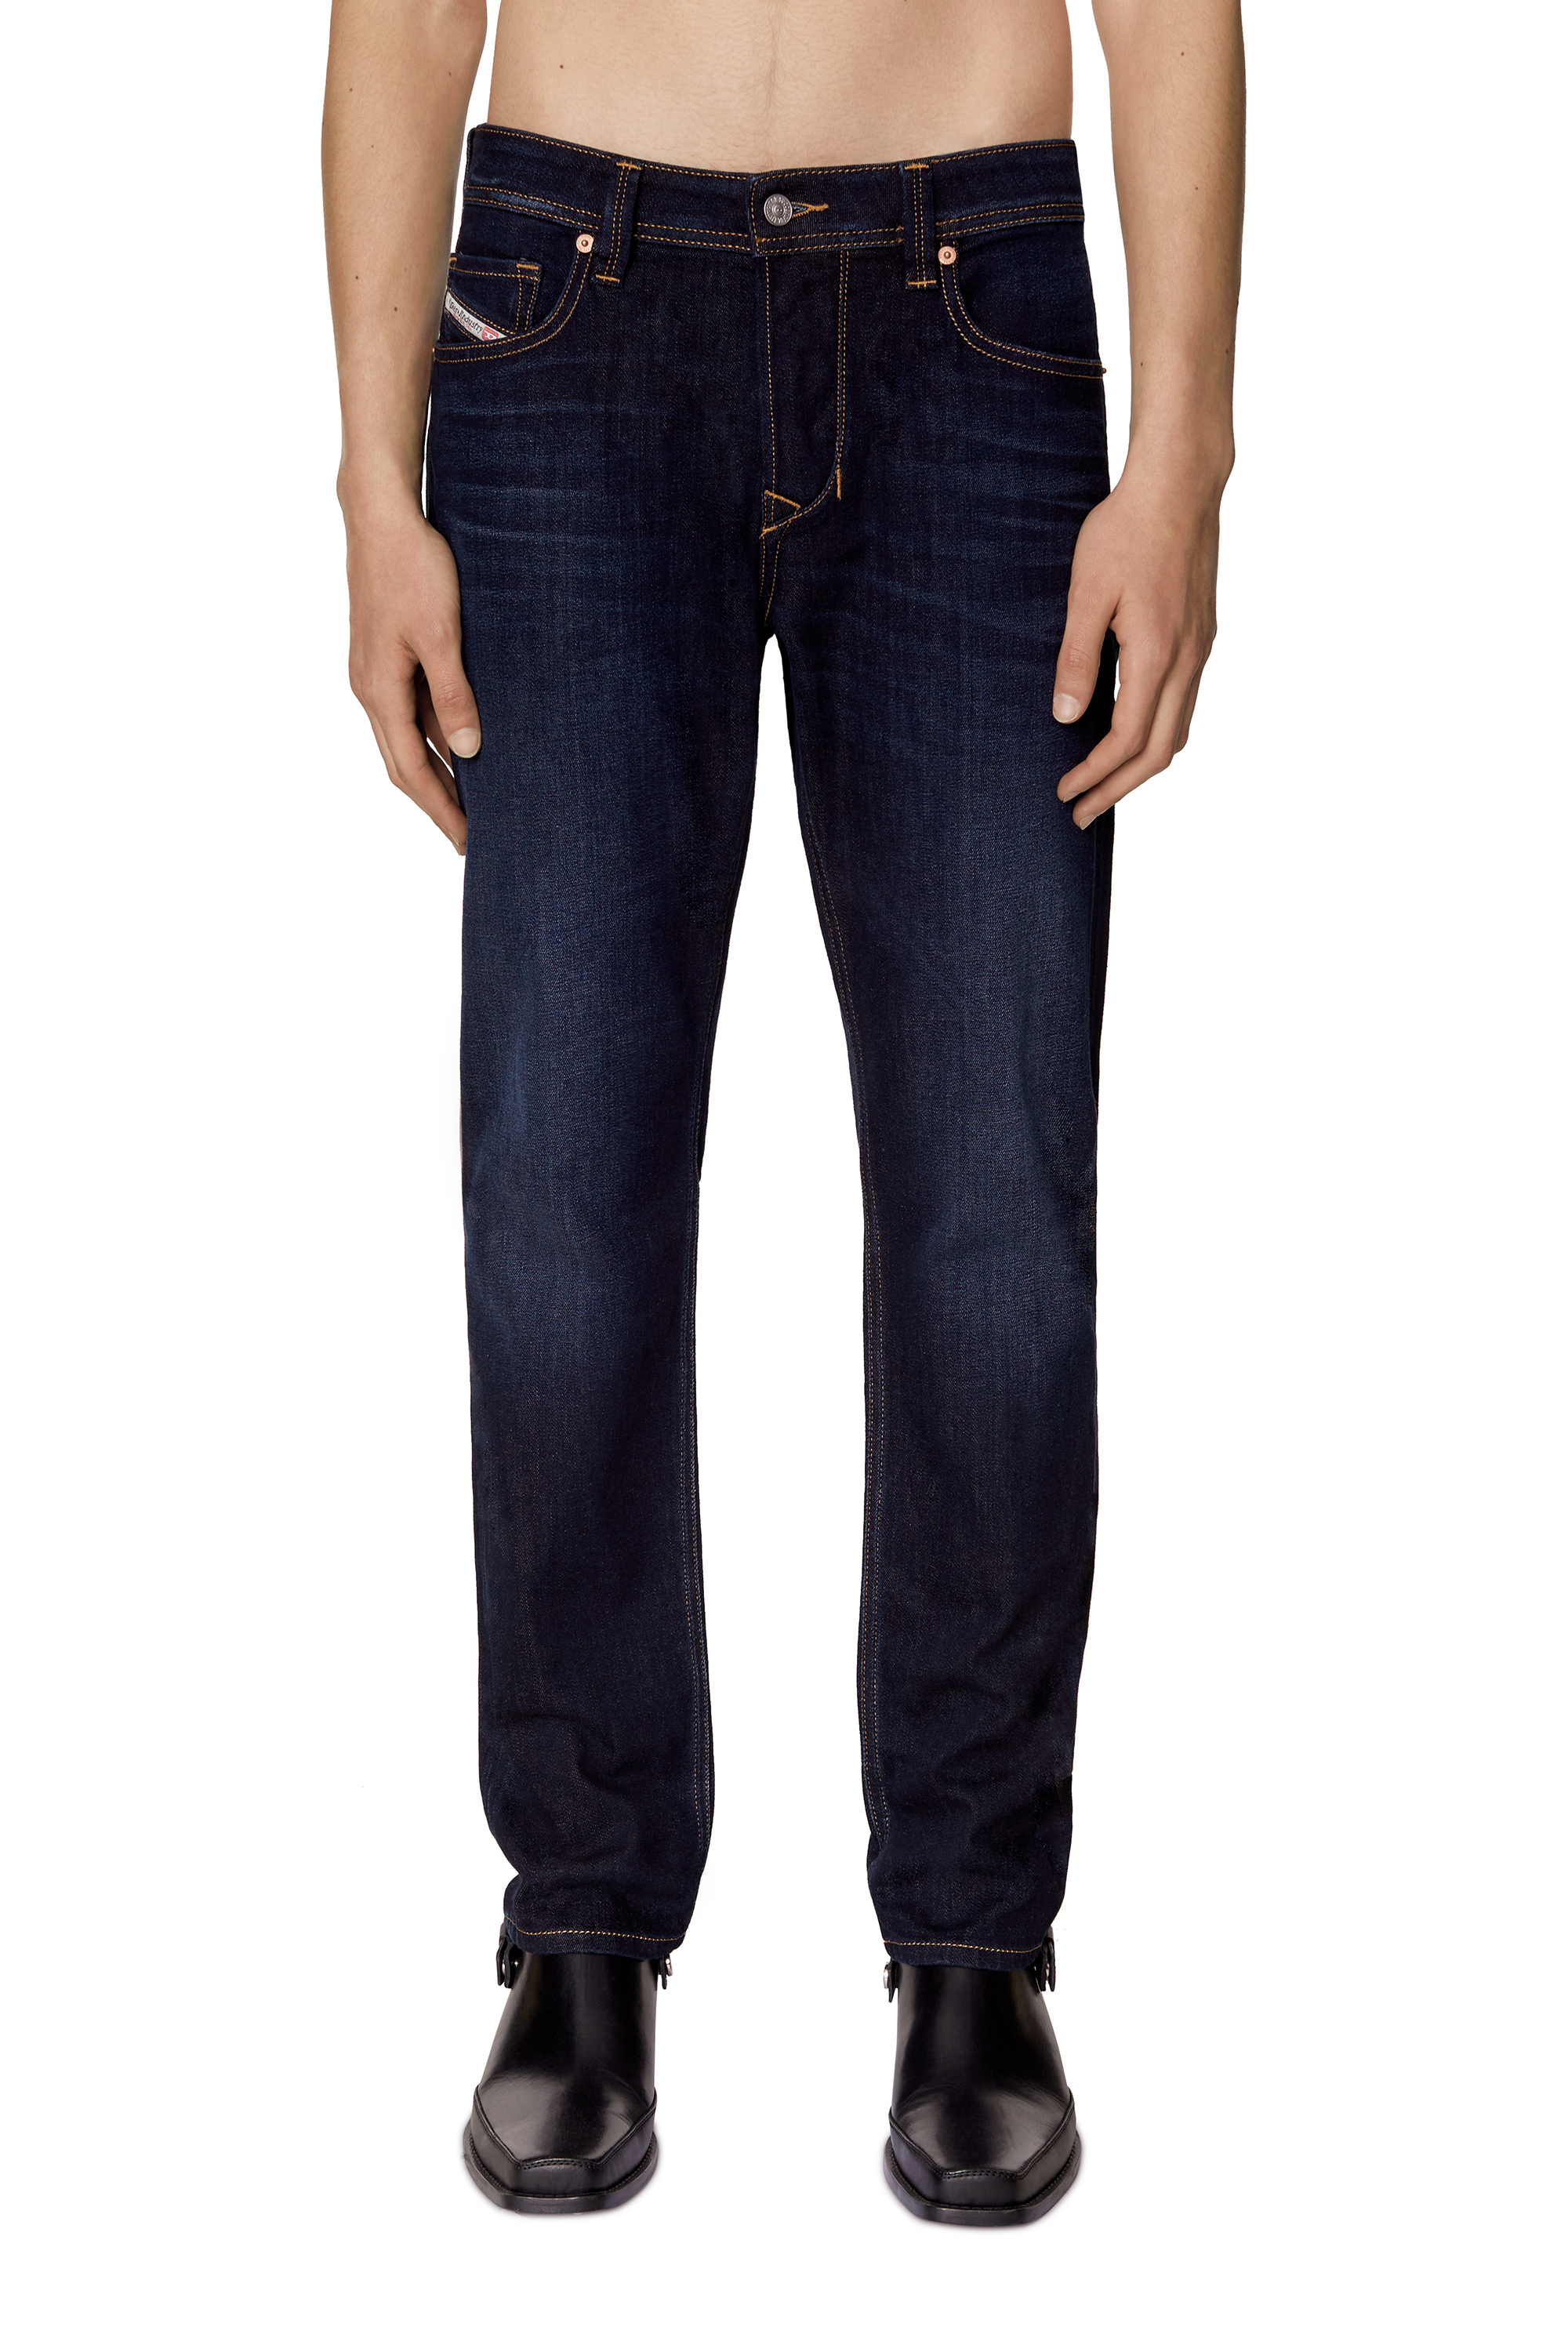 LARKEE-BEEX Man: Tapered Dark blue Jeans, mid rise | Diesel